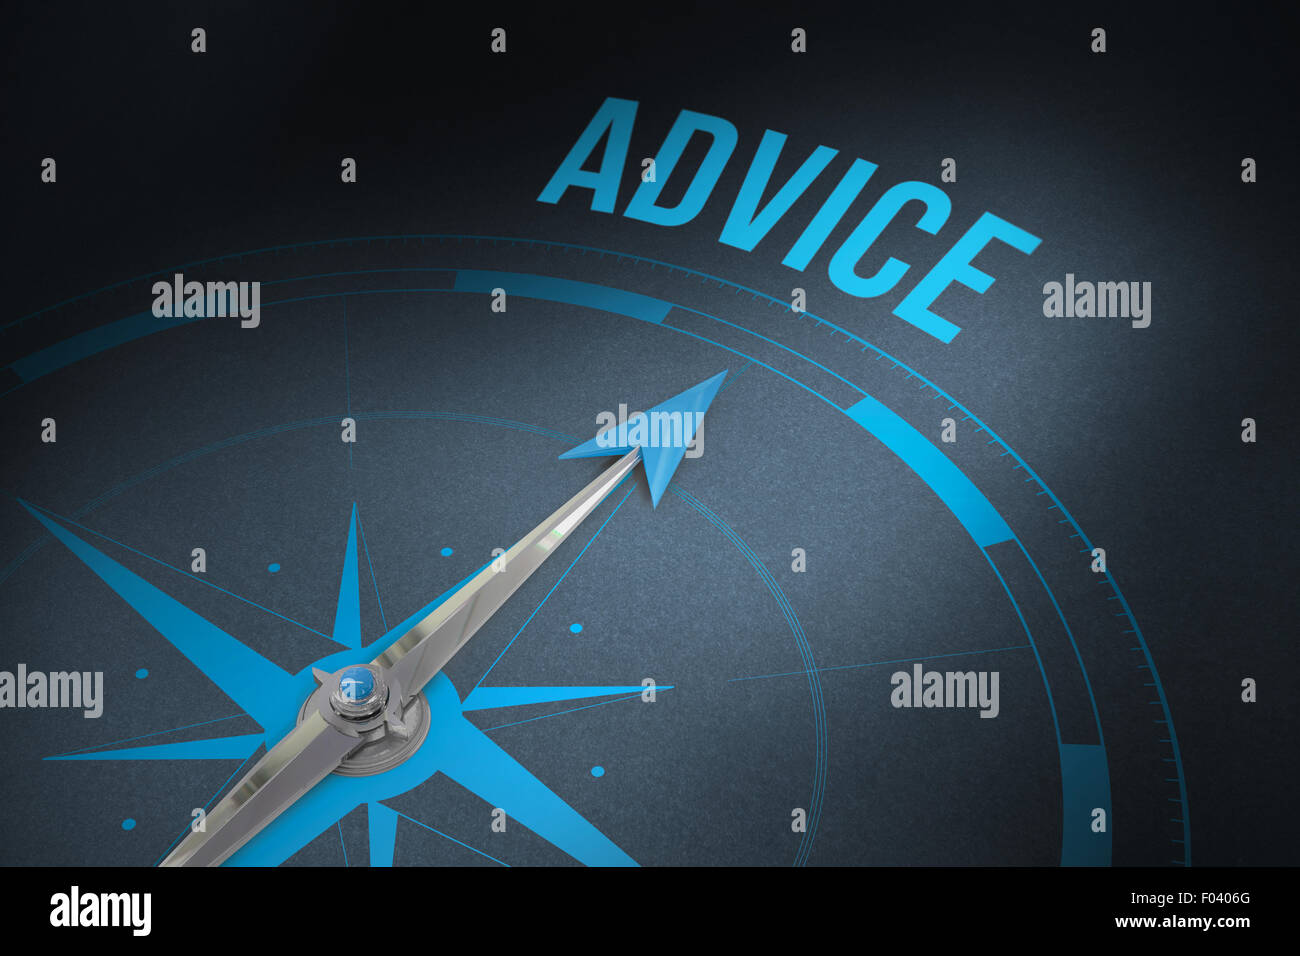 Advice against grey background Stock Photo